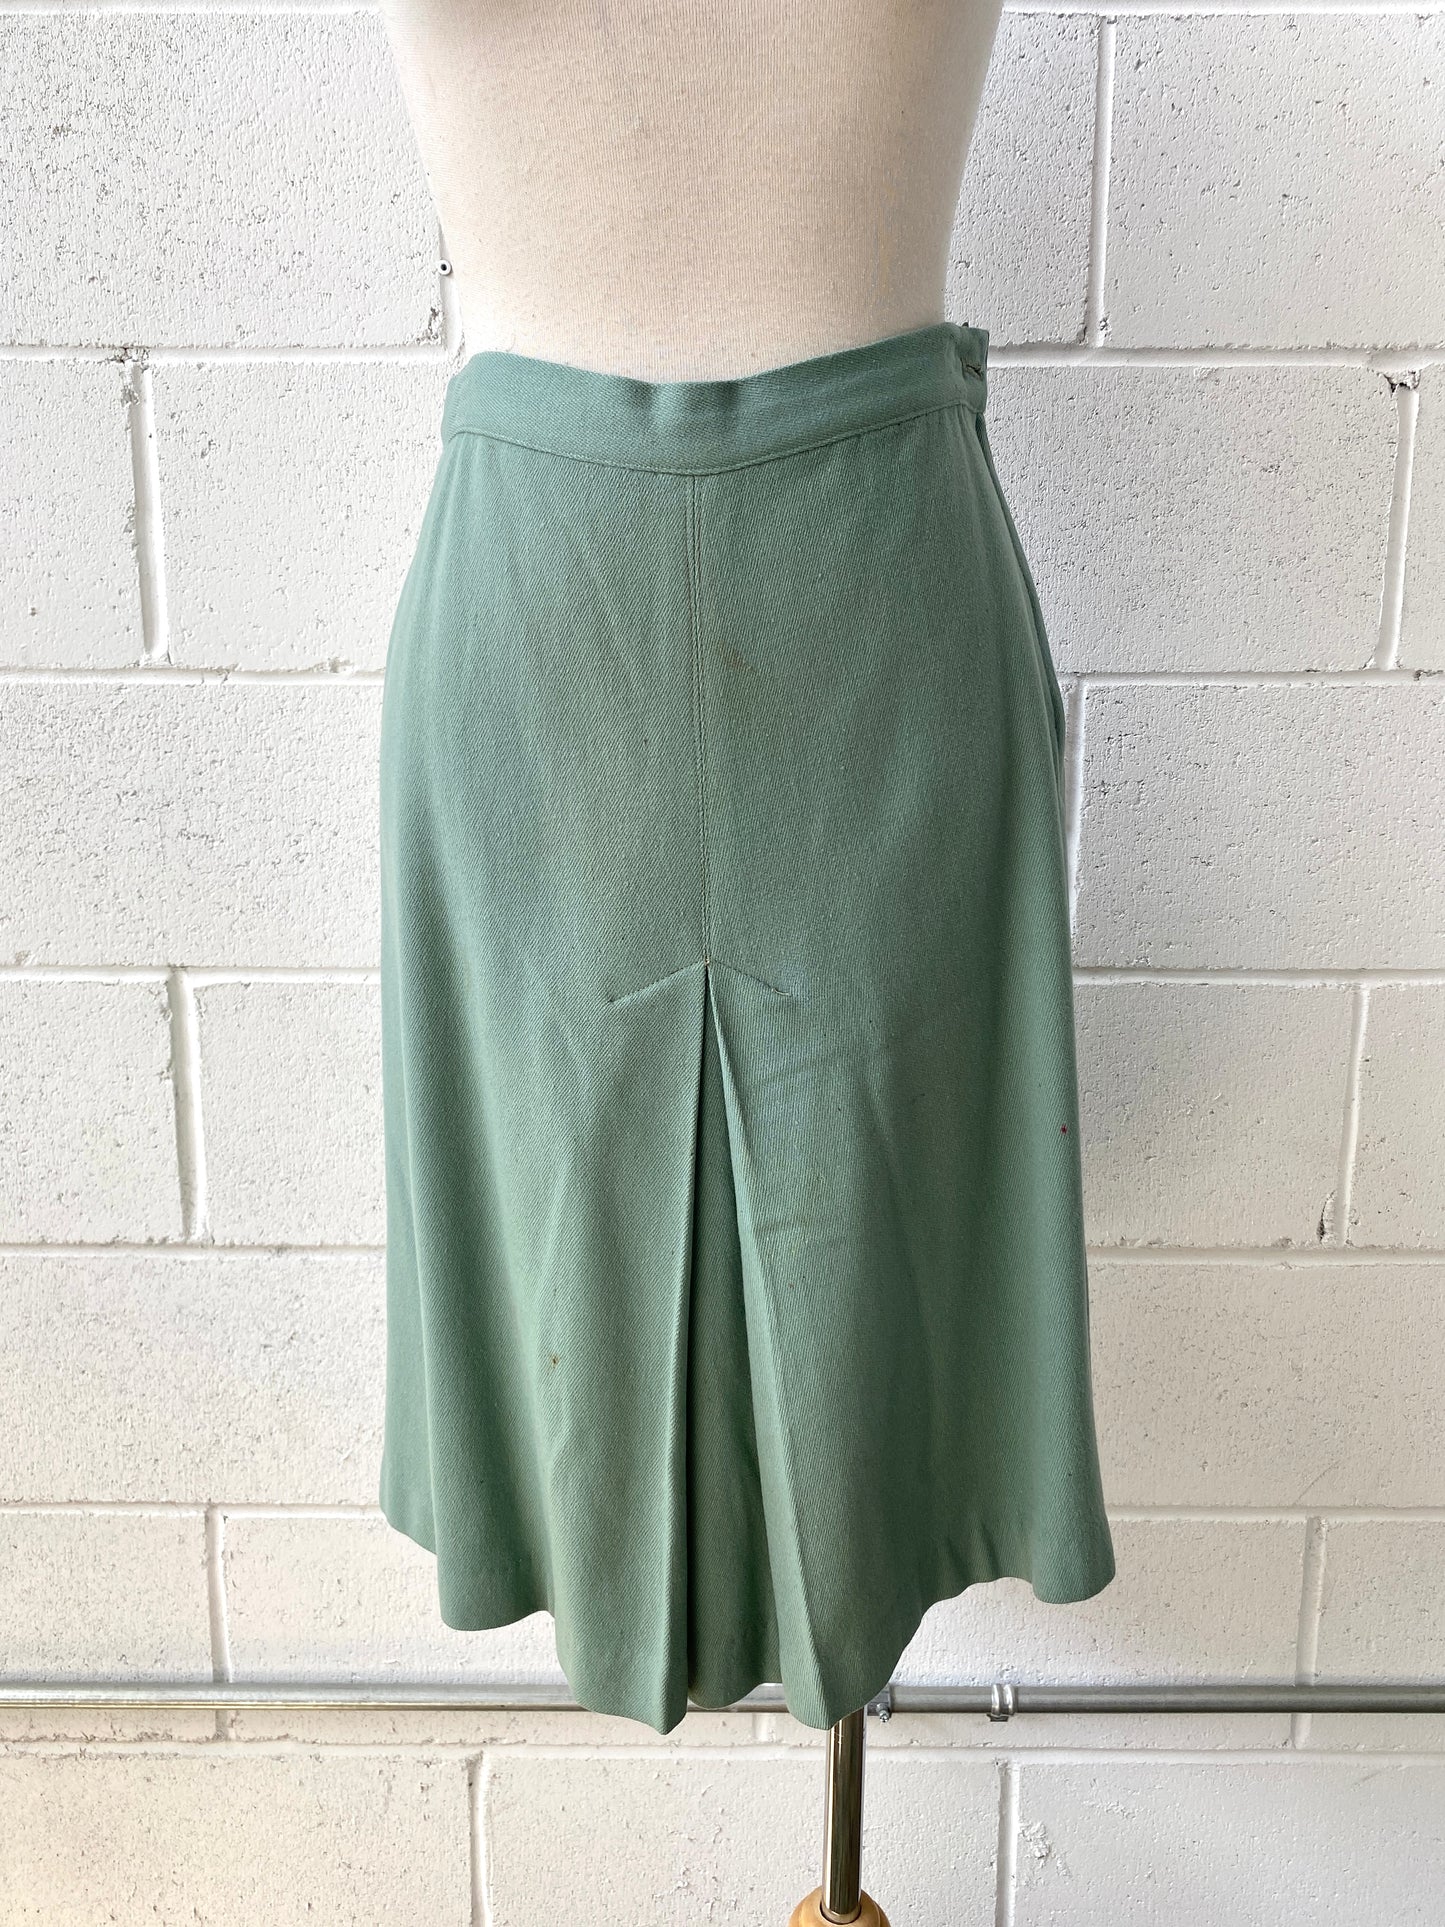 Vintage 1940s Seafoam Green Two-Piece Skirt Suit, W26"